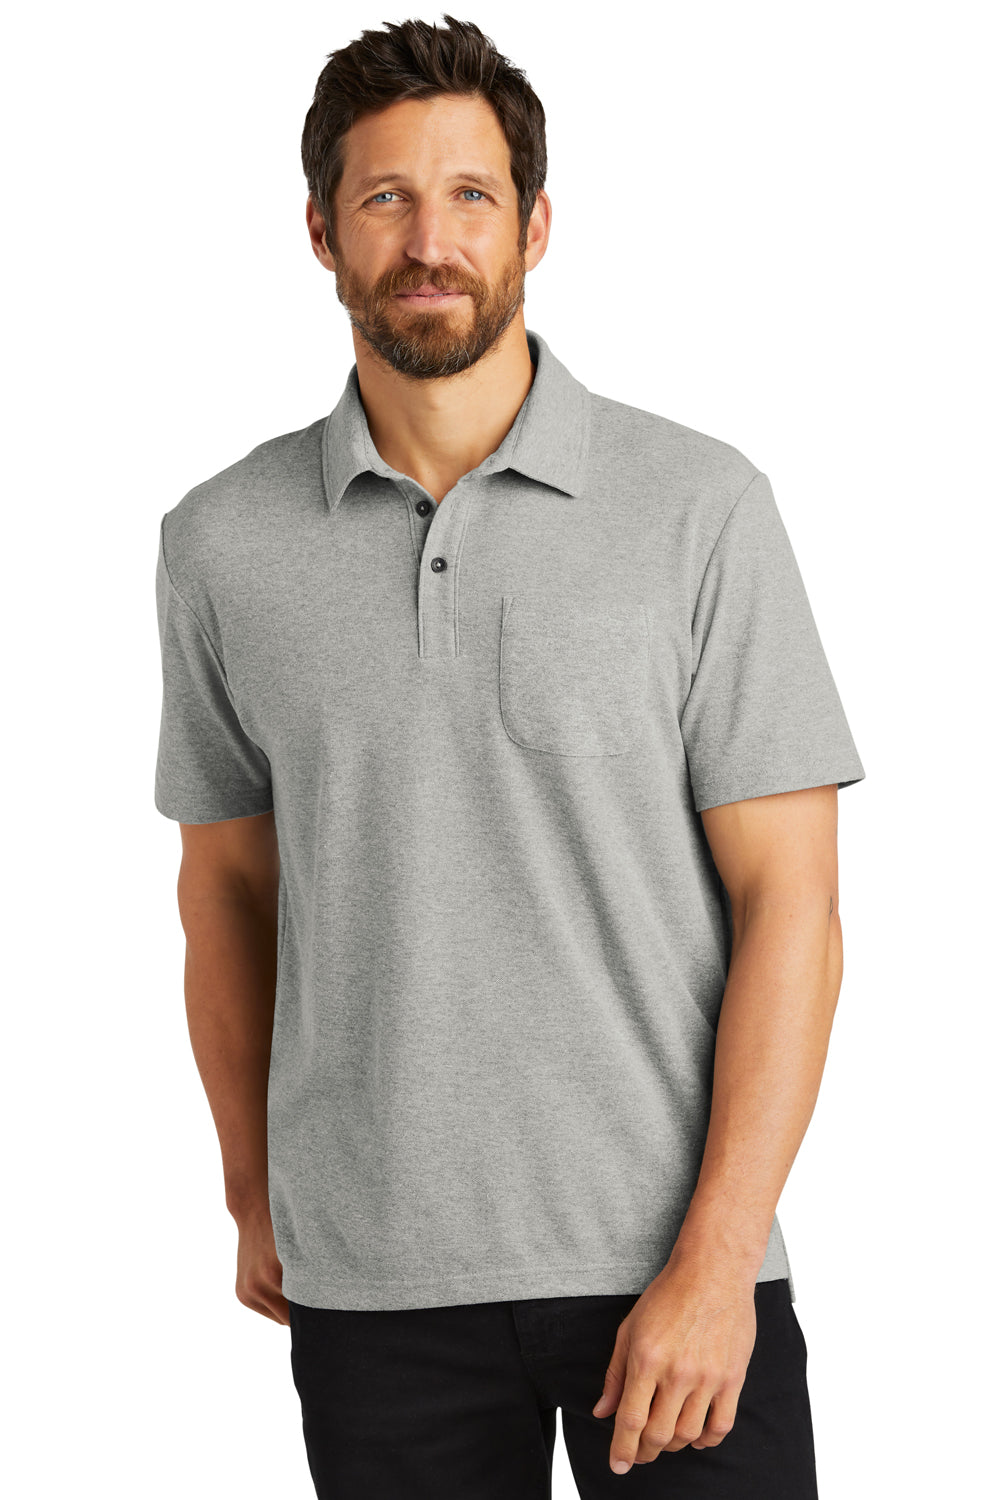 Port Authority K868 Mens C-FREE Pique Short Sleeve Polo Shirt w/ Pocket Heather Deep Smoke Grey Front